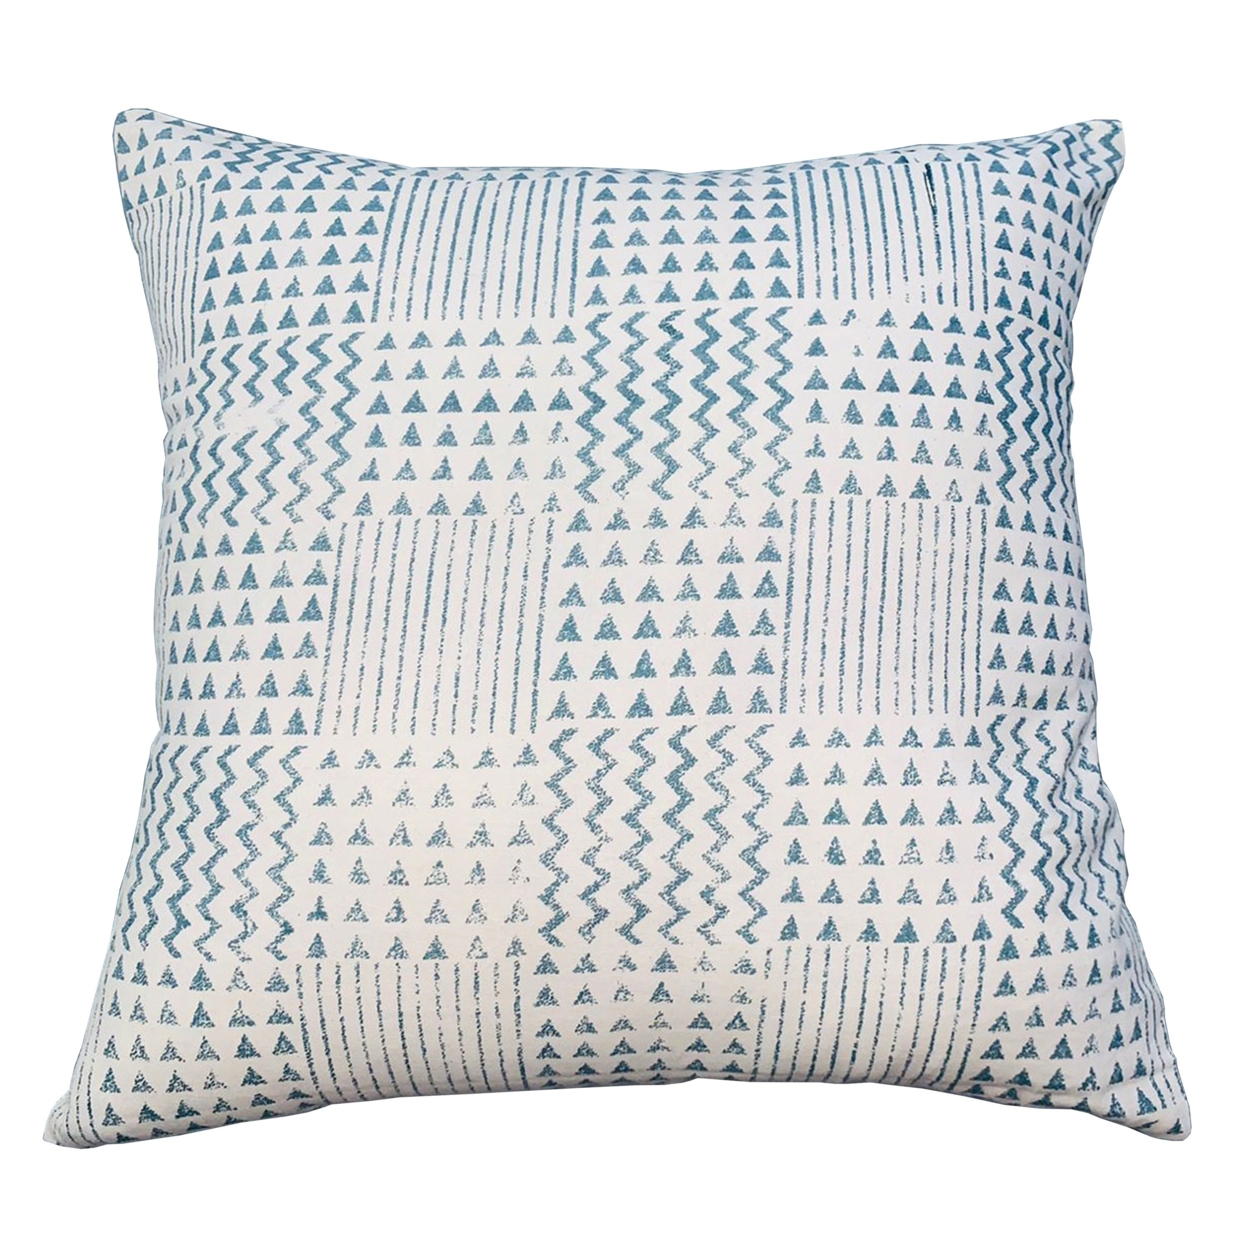 18 X 18 Handcrafted Square Cotton Accent Throw Pillow, Aztec Minimalistic Print, Blue, White- Saltoro Sherpi